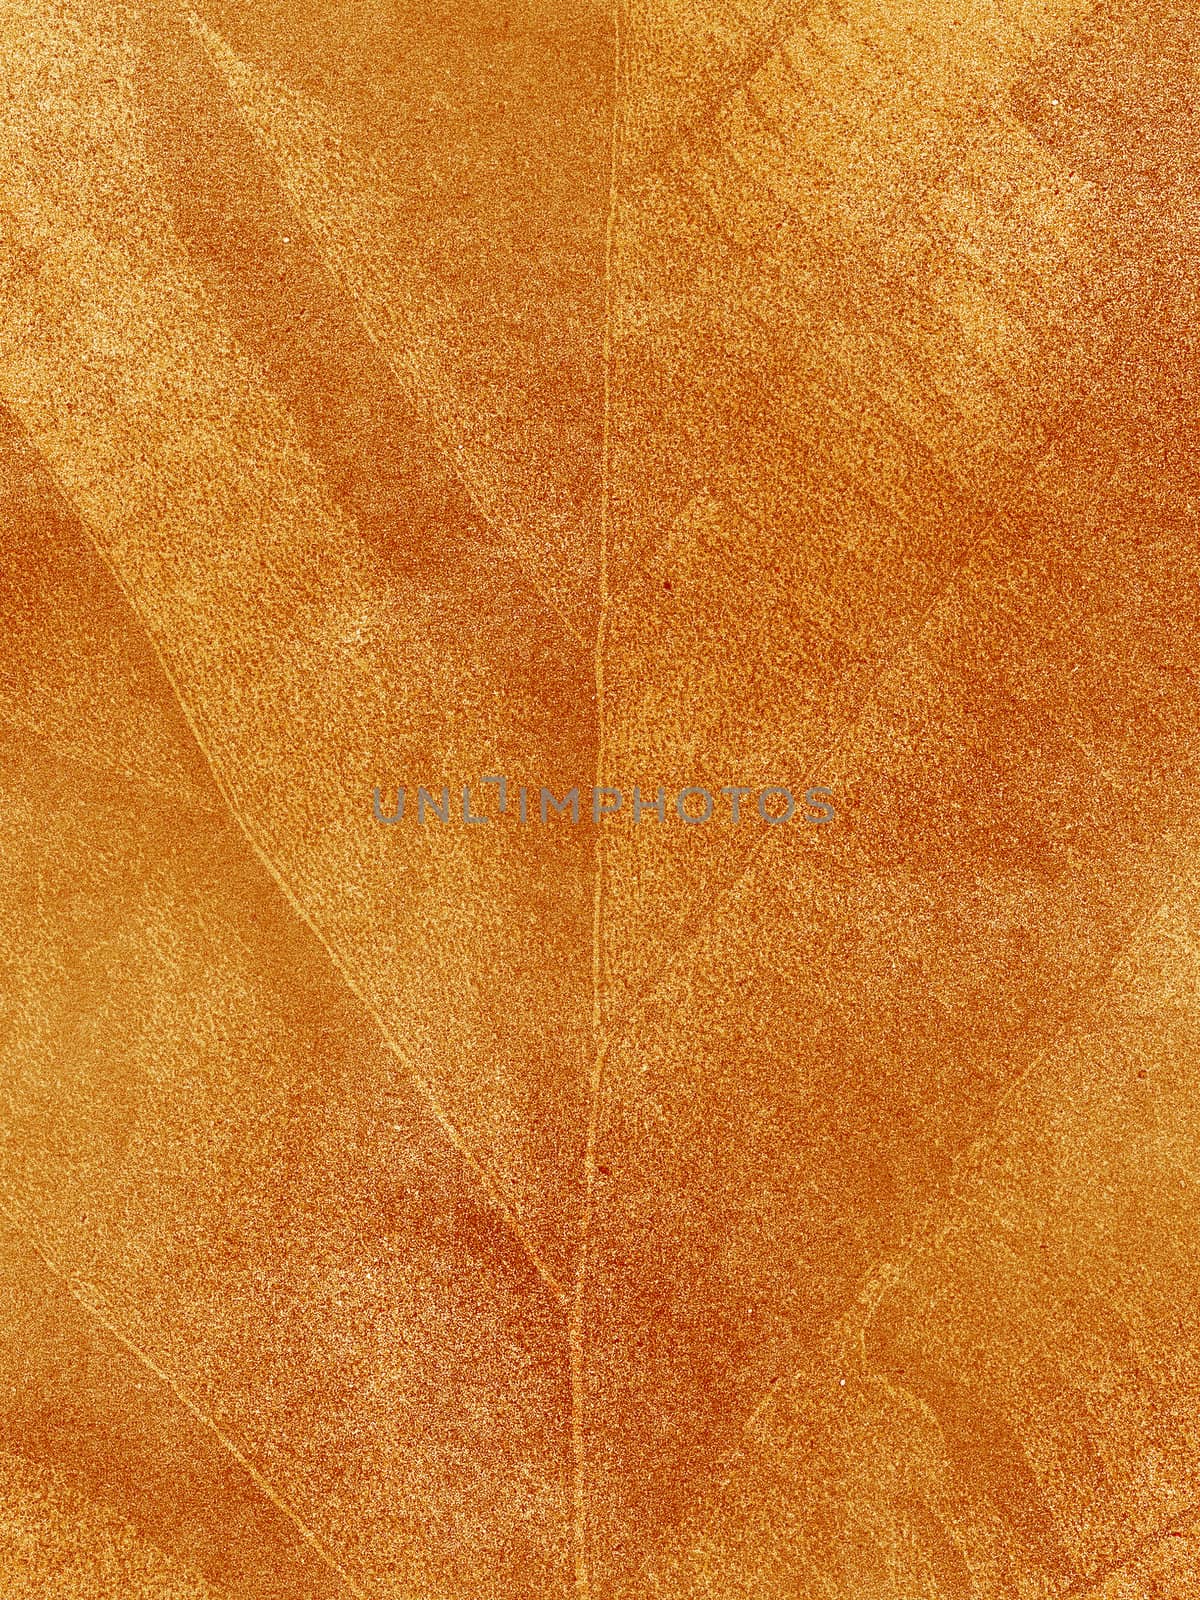 Dry leaf textured on grunge paper background by jakgree